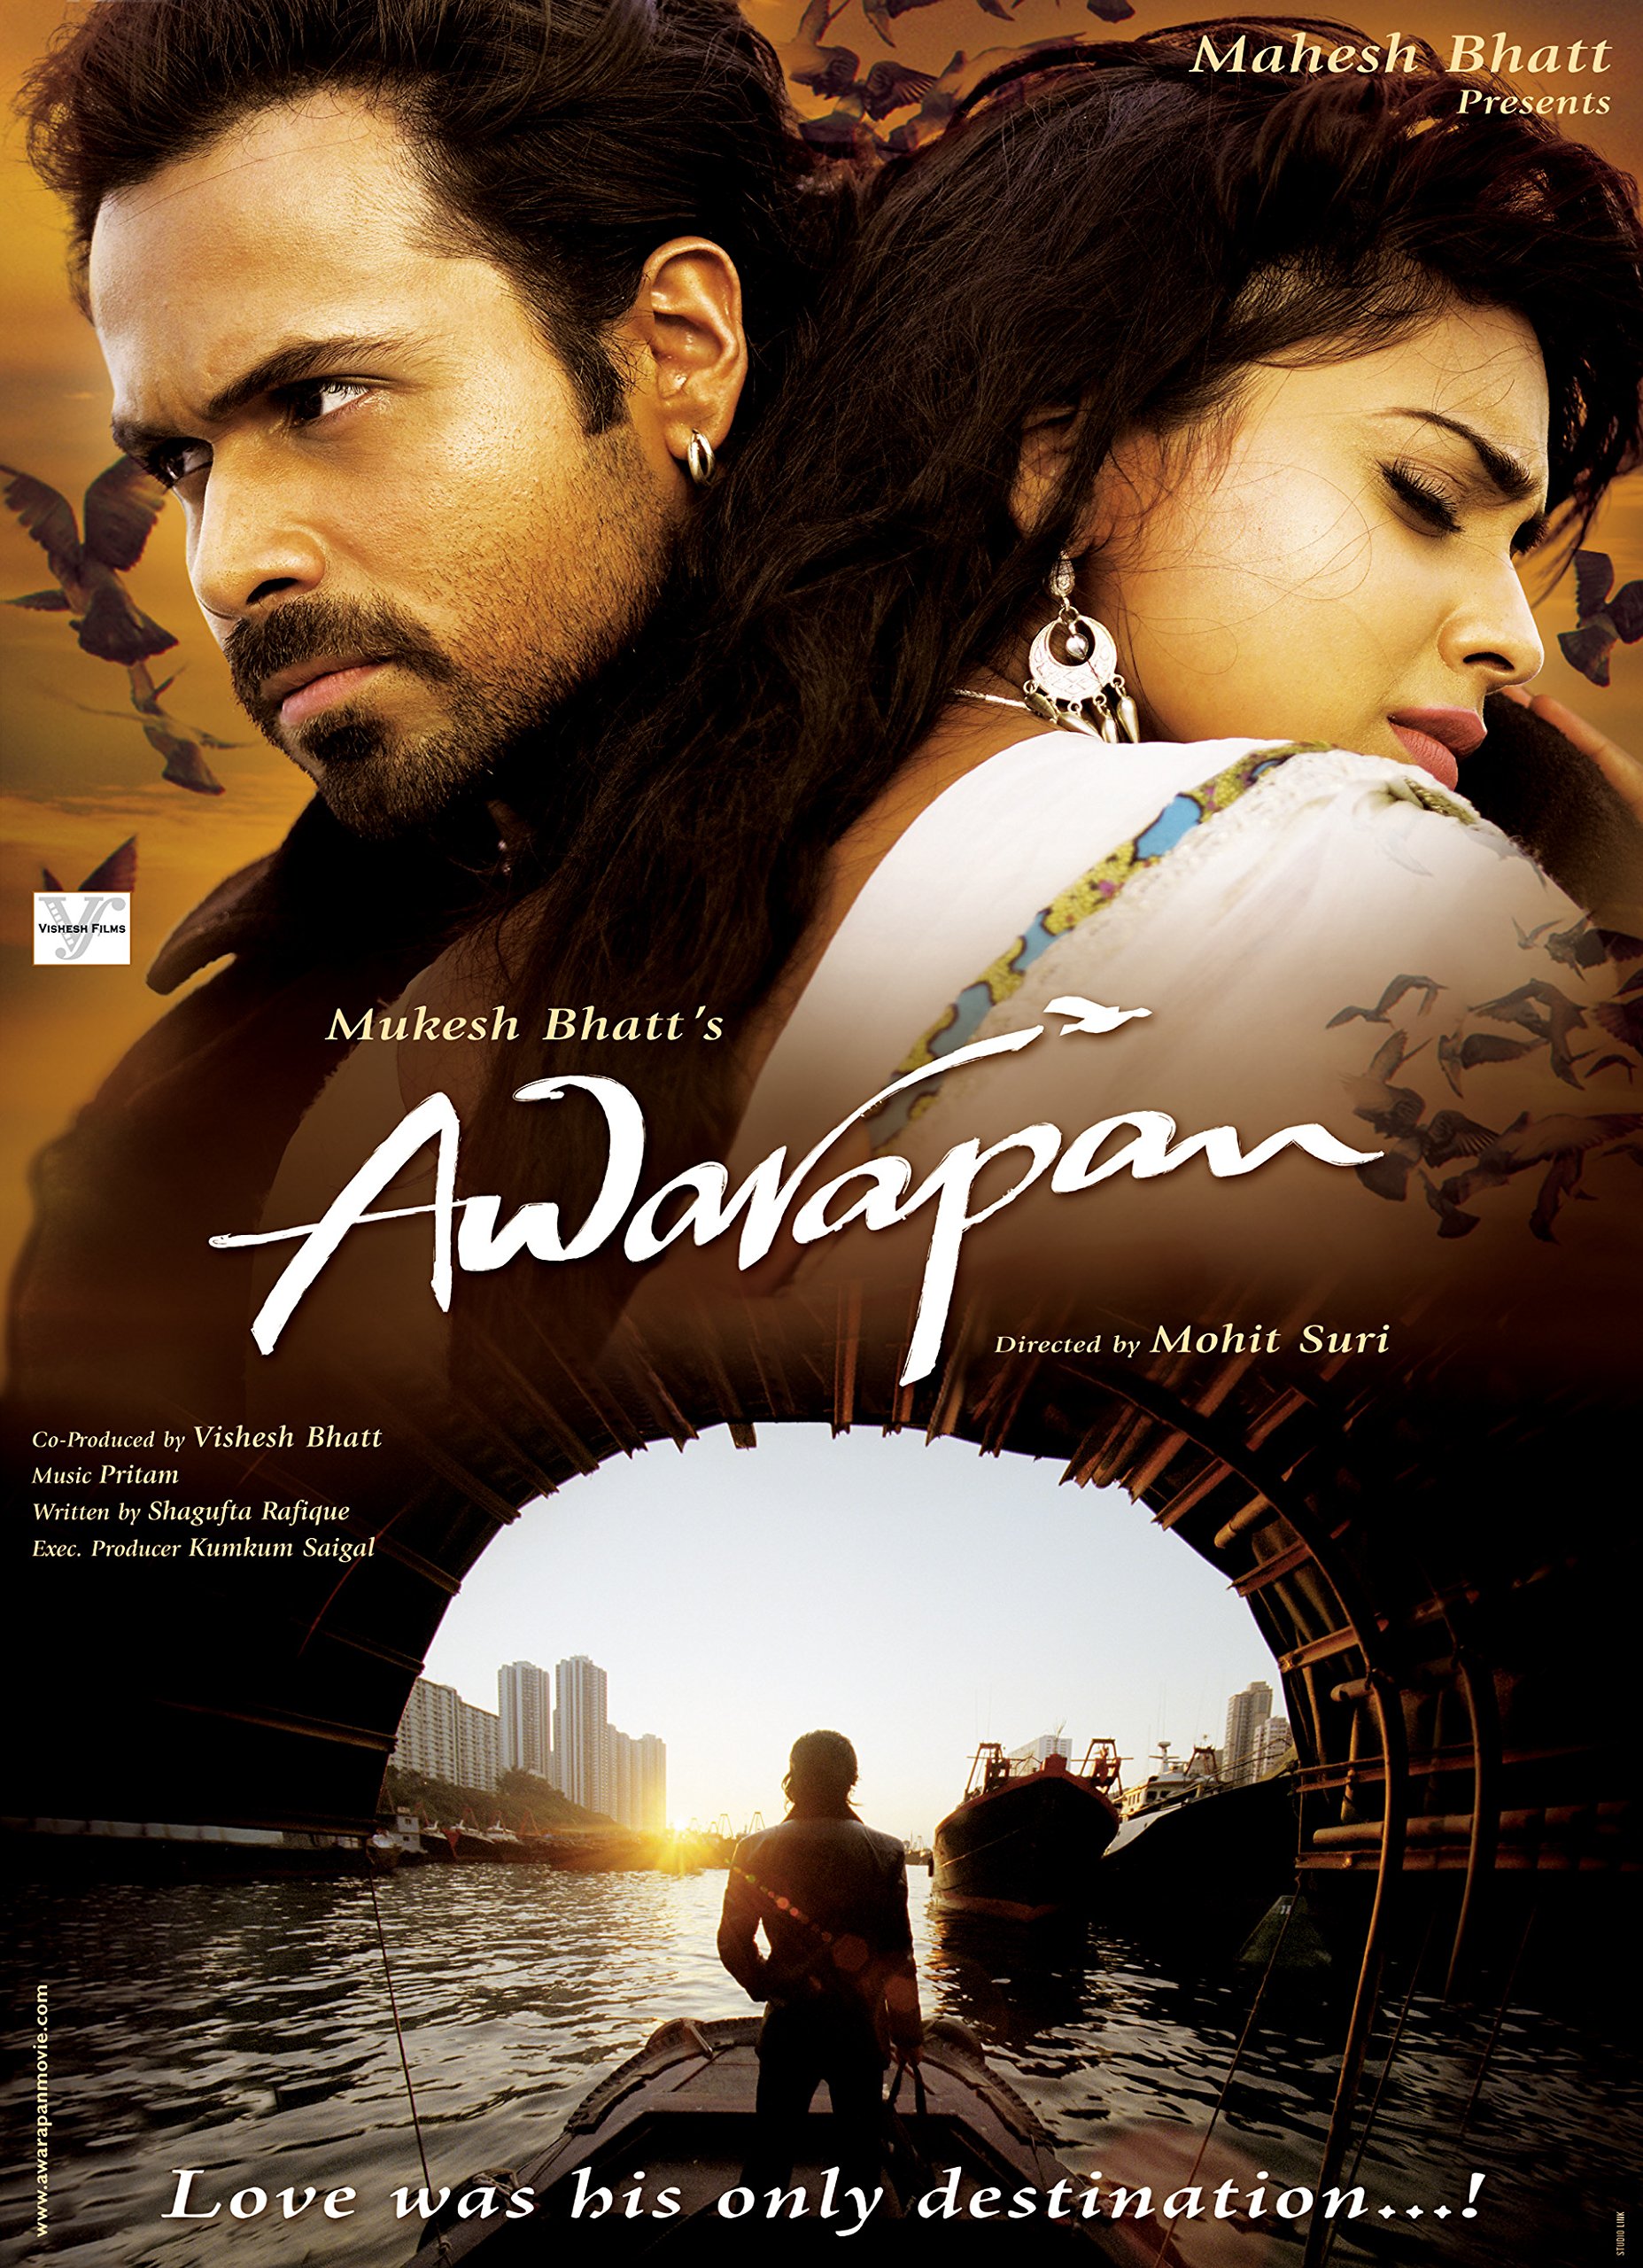 Awarapan Hindi Movie Streaming Online Watch on Google Play, Youtube